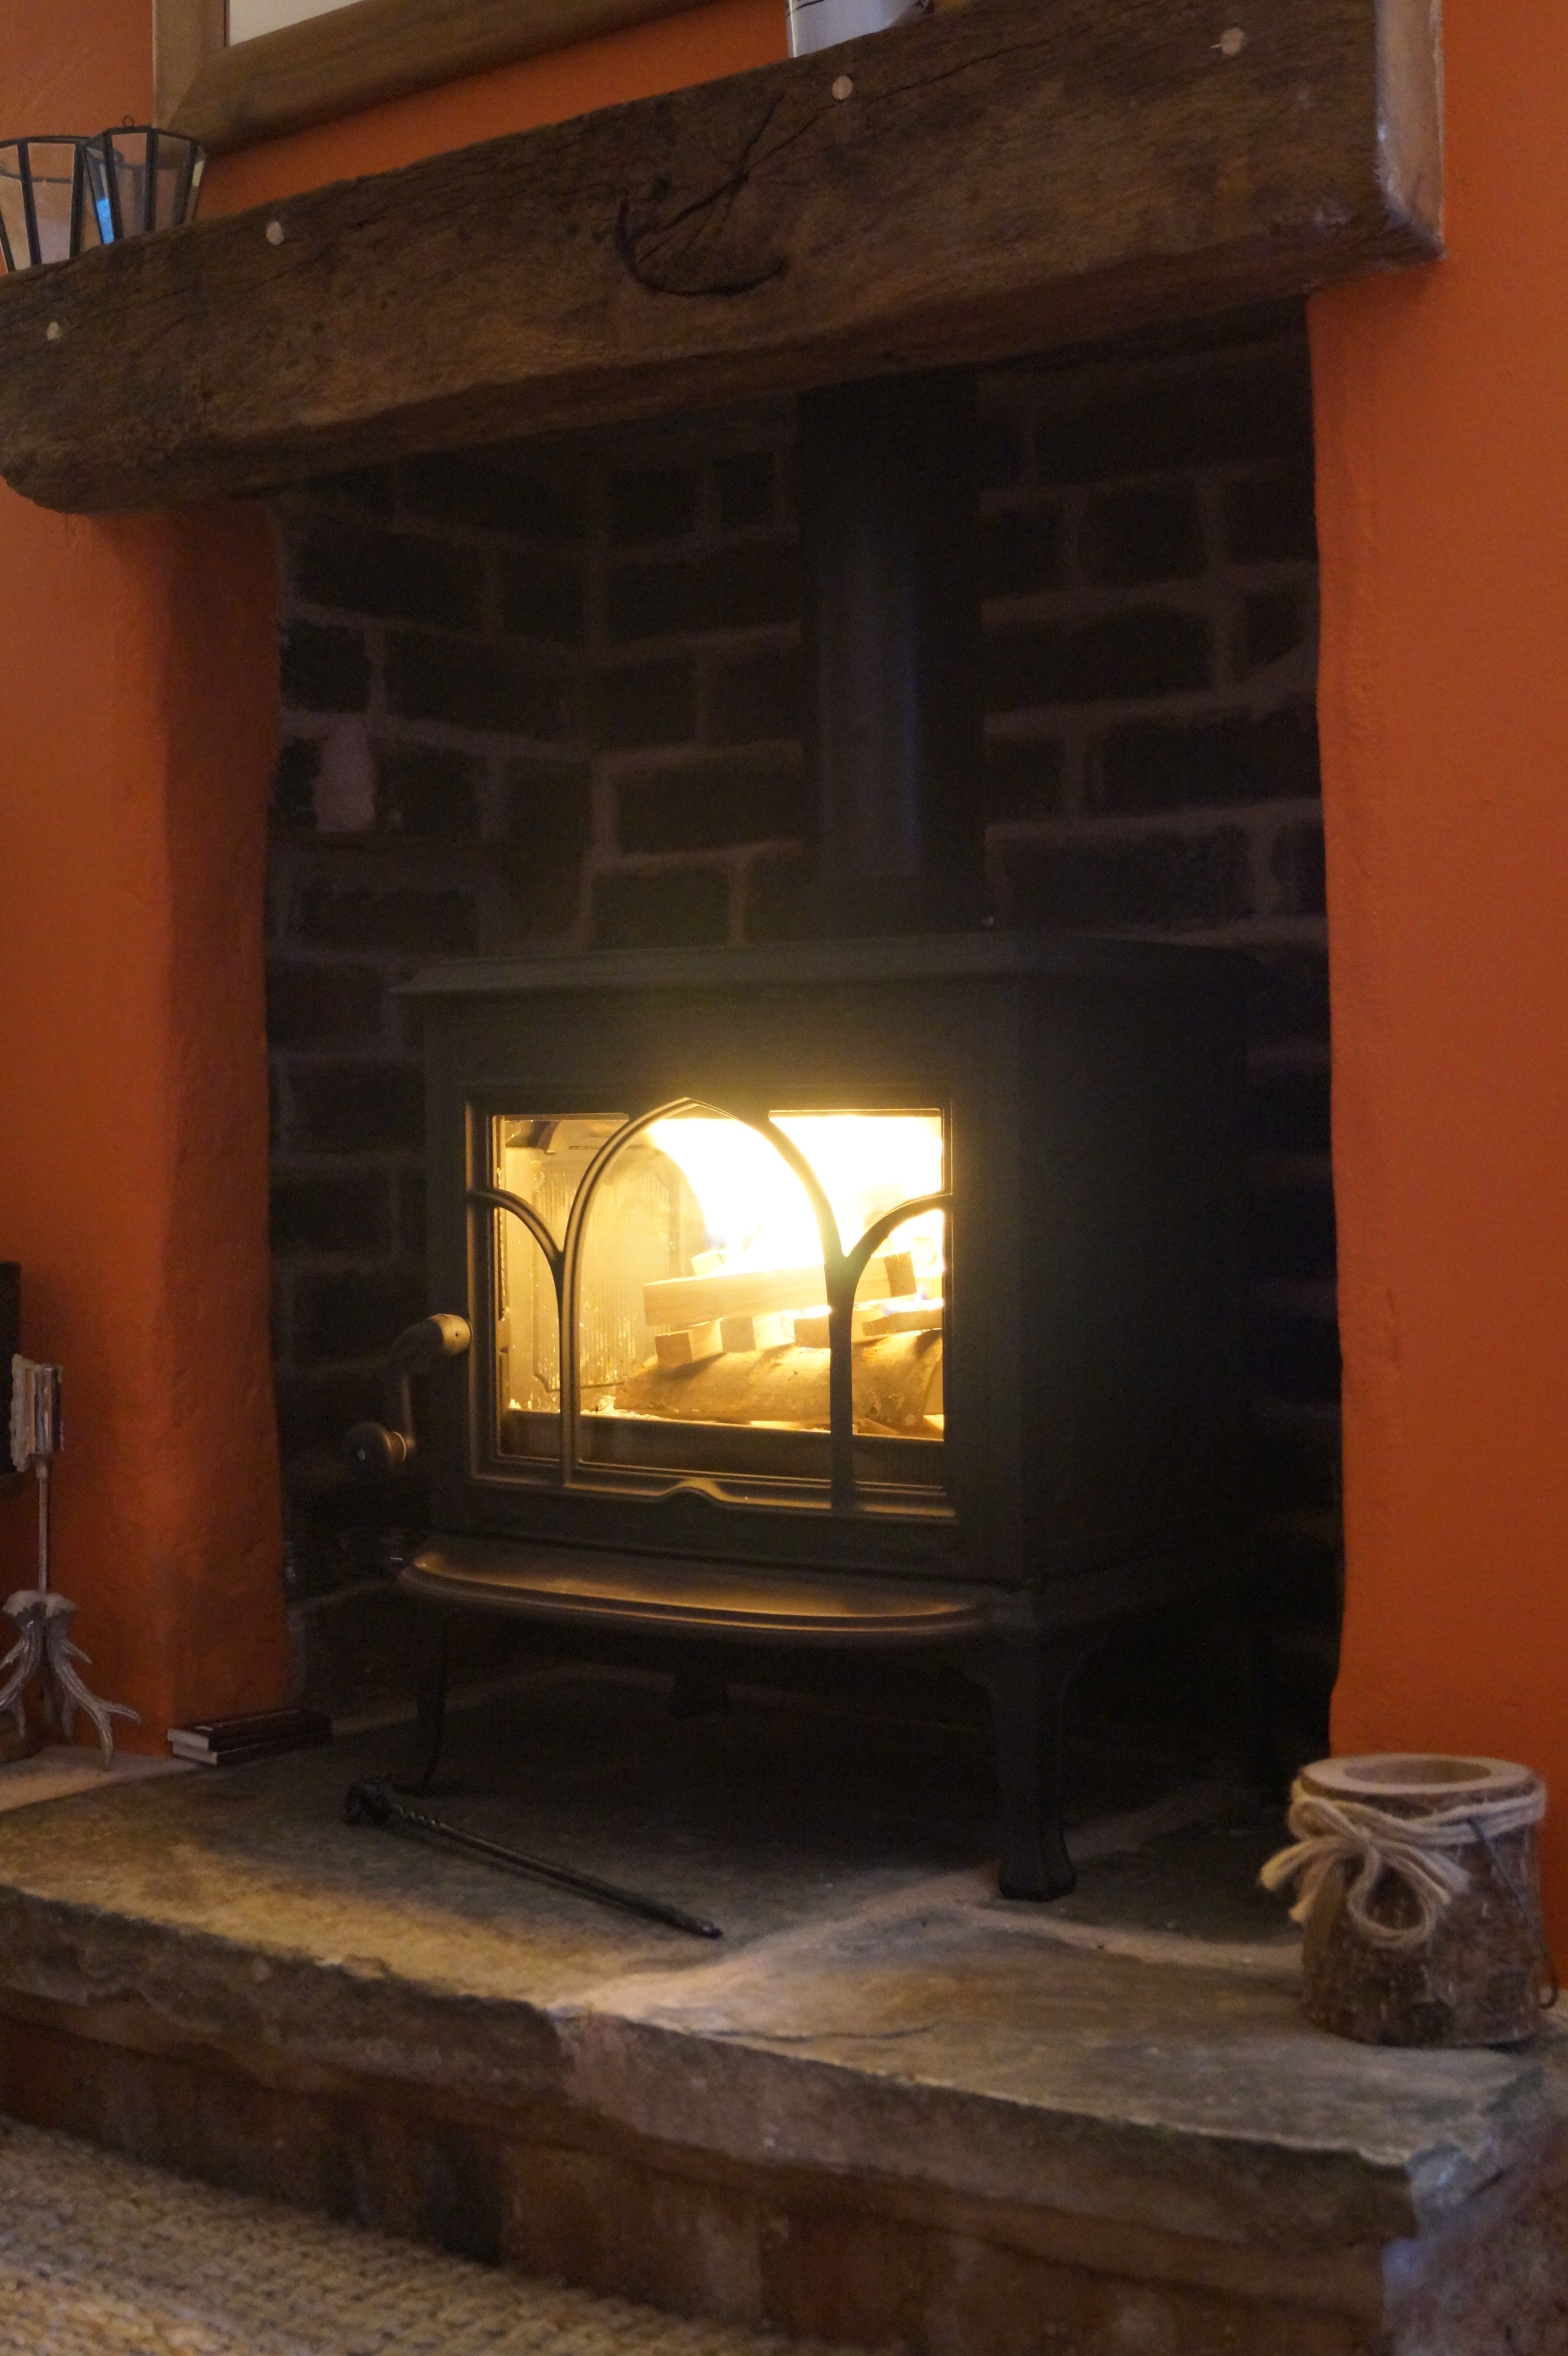 Jotul Gas Fireplace Luxury Our norwegian Jotul F100 Wood Burning Stove Recently